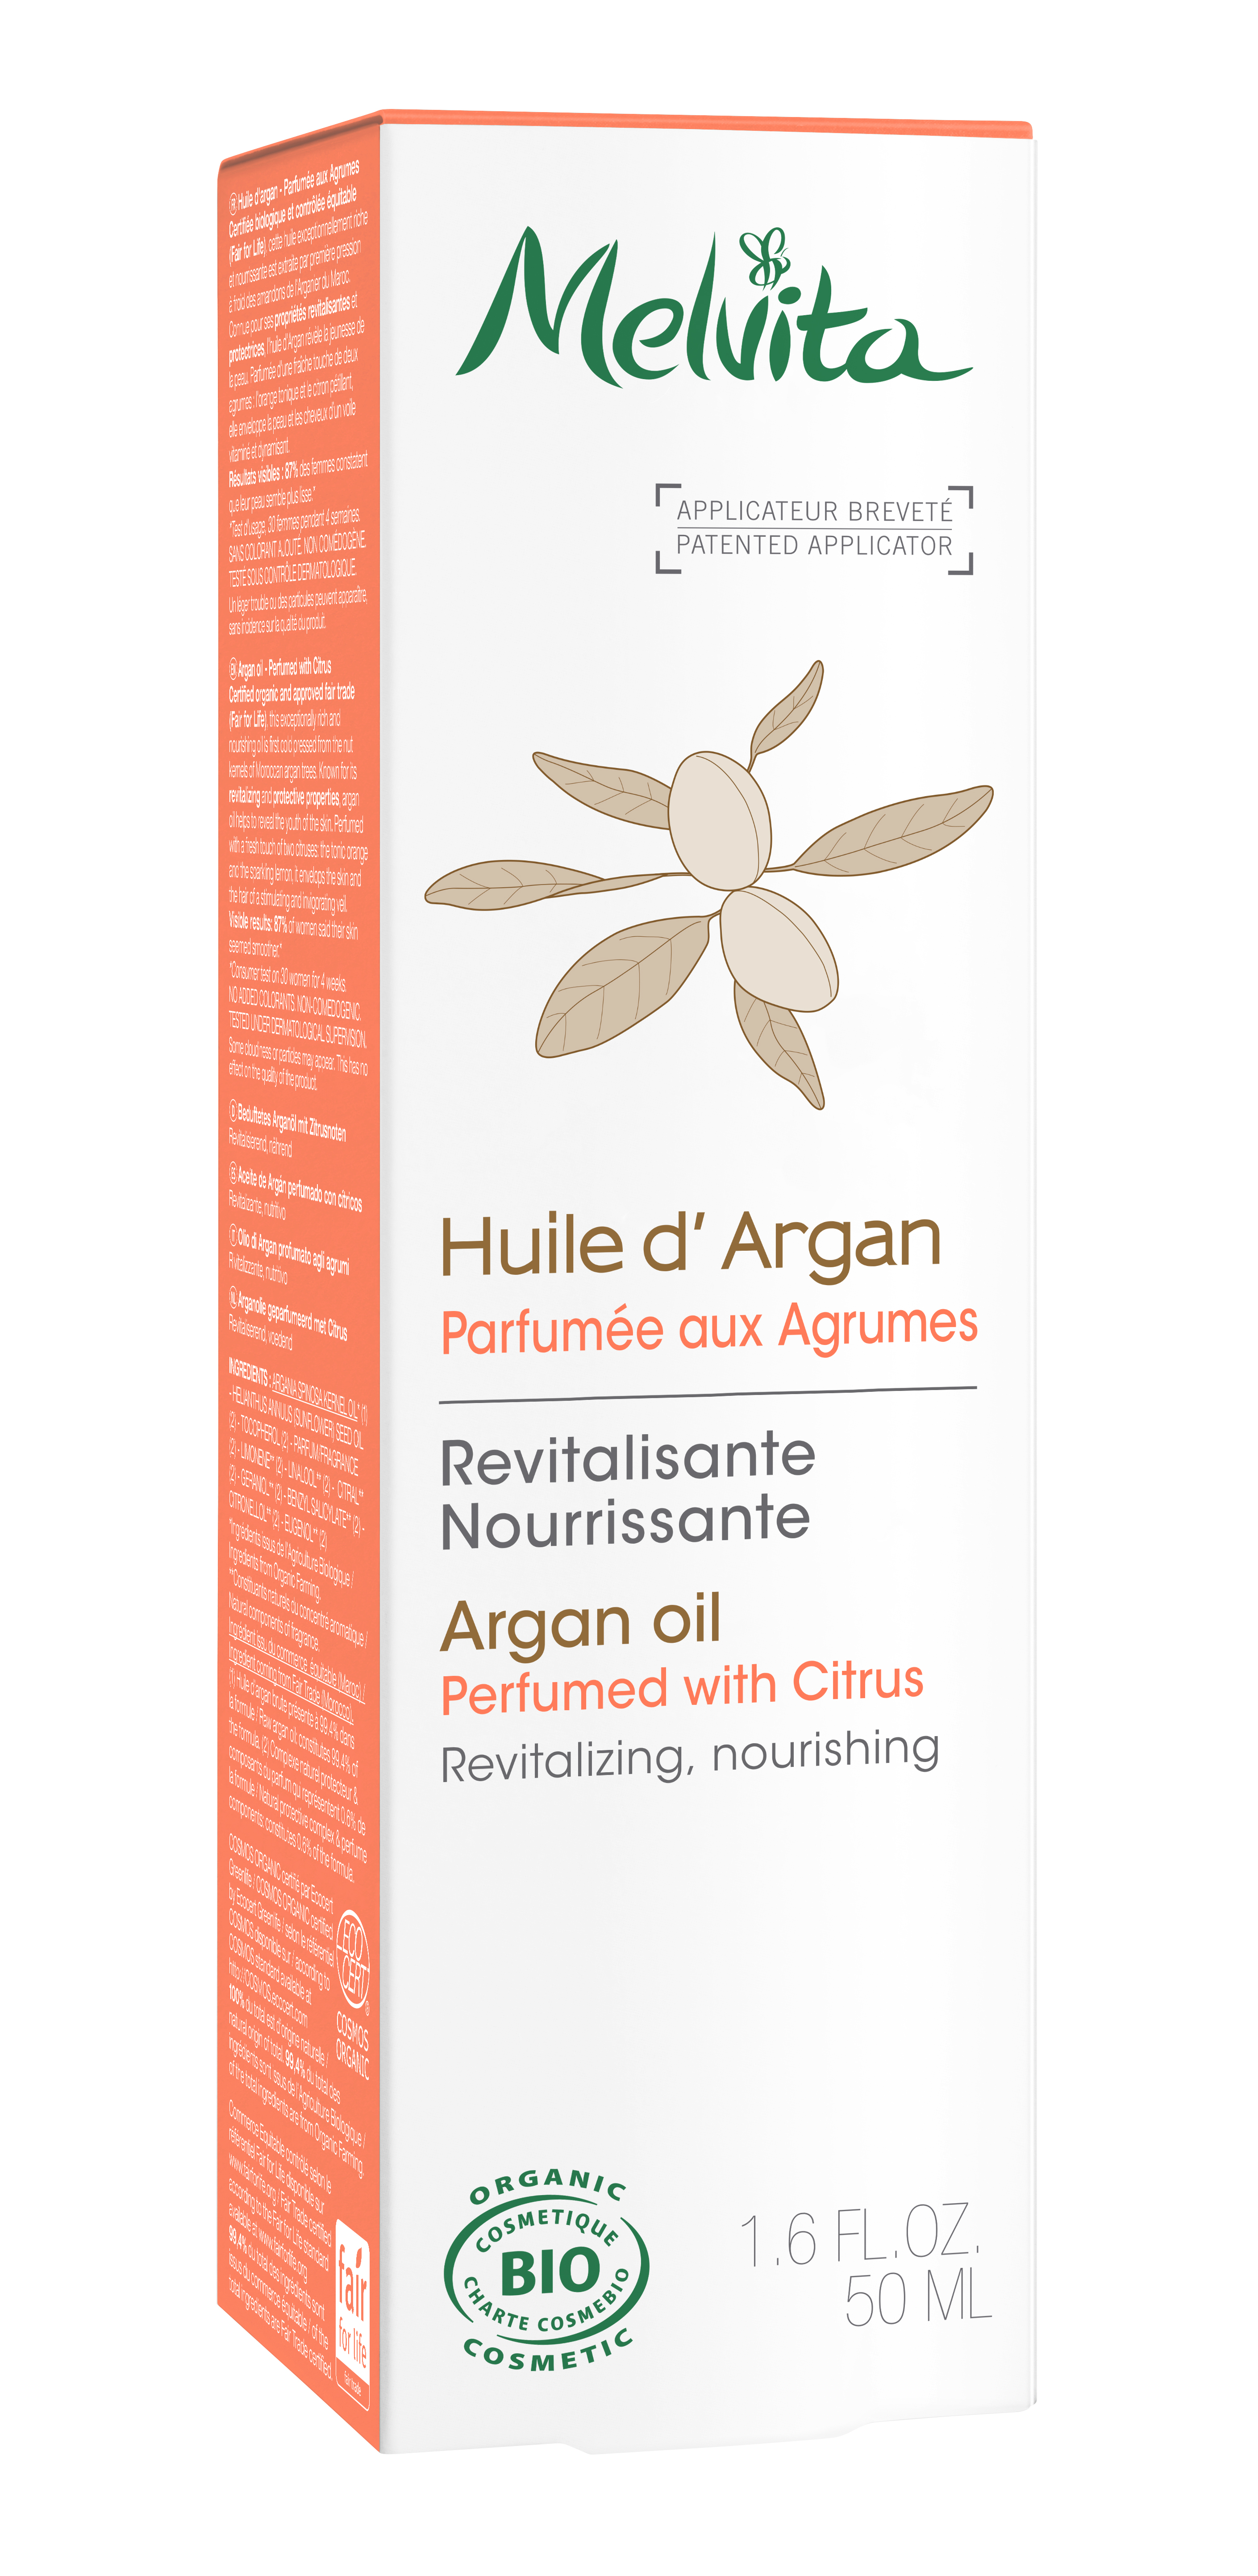 Argan oil Perfumed with Citrus